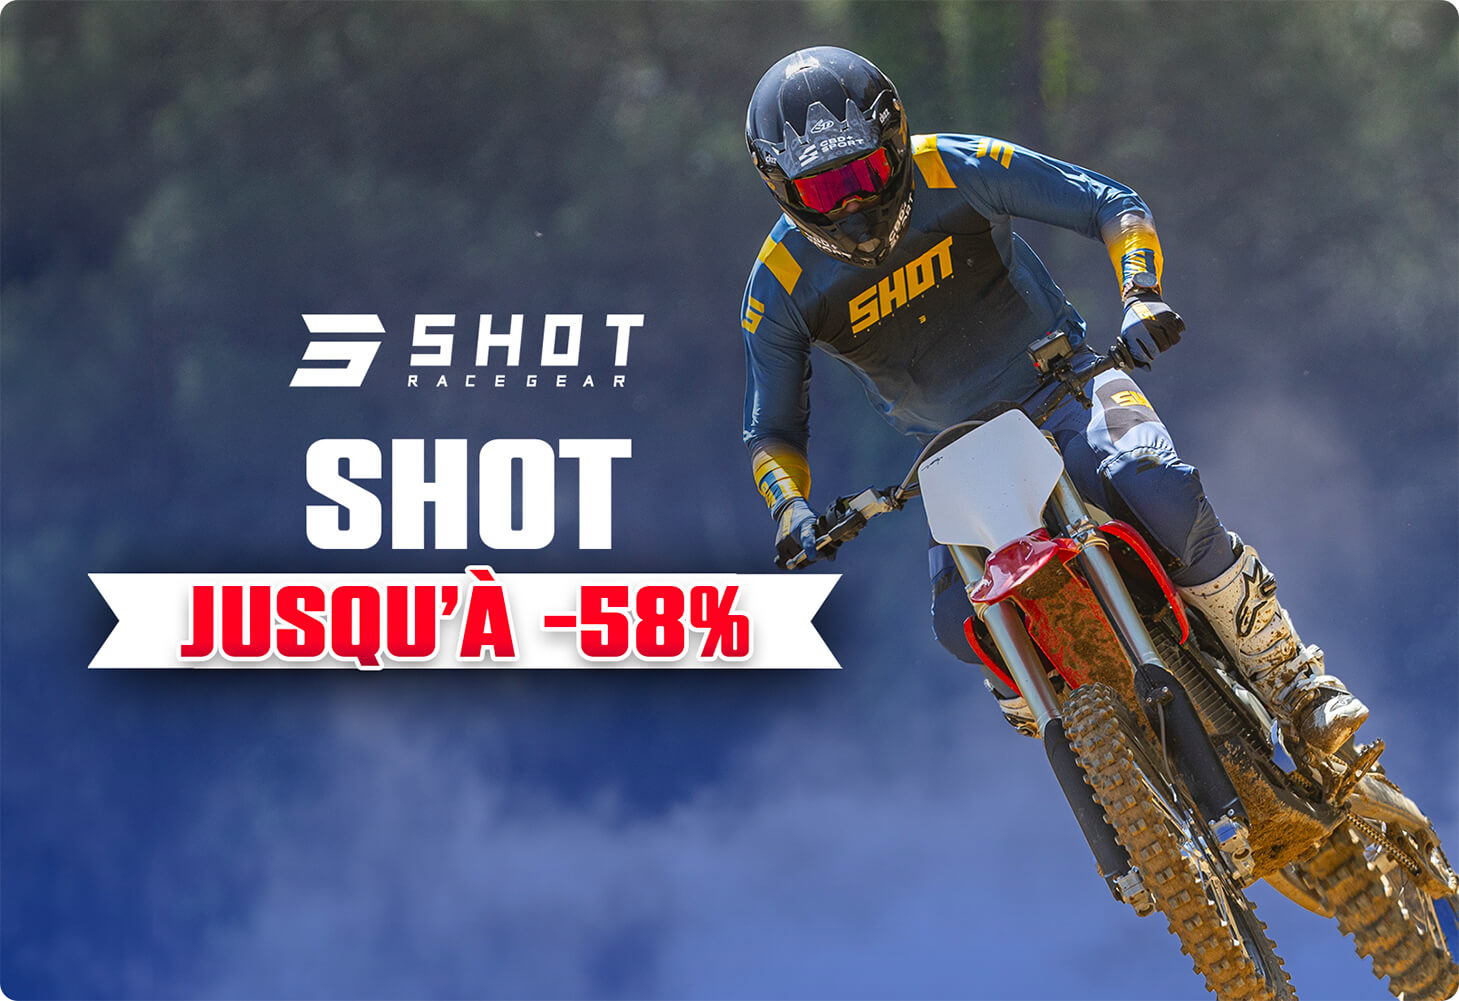 Shot jusqu' -58%